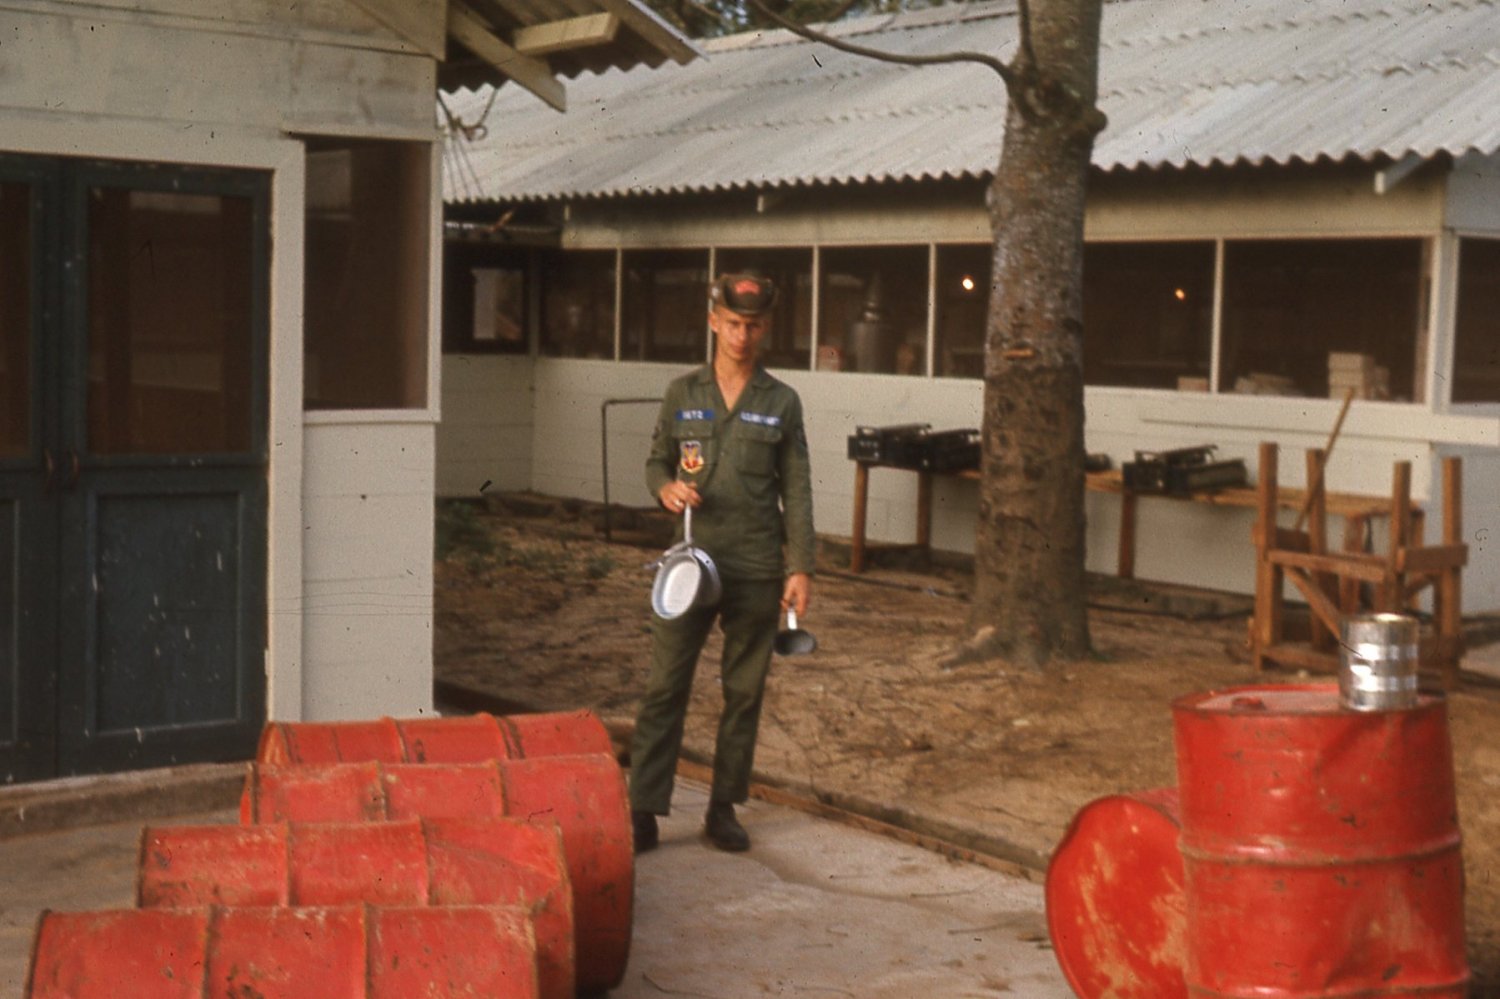 Da Nang AFB Chow Hall 1966 Viet Nam